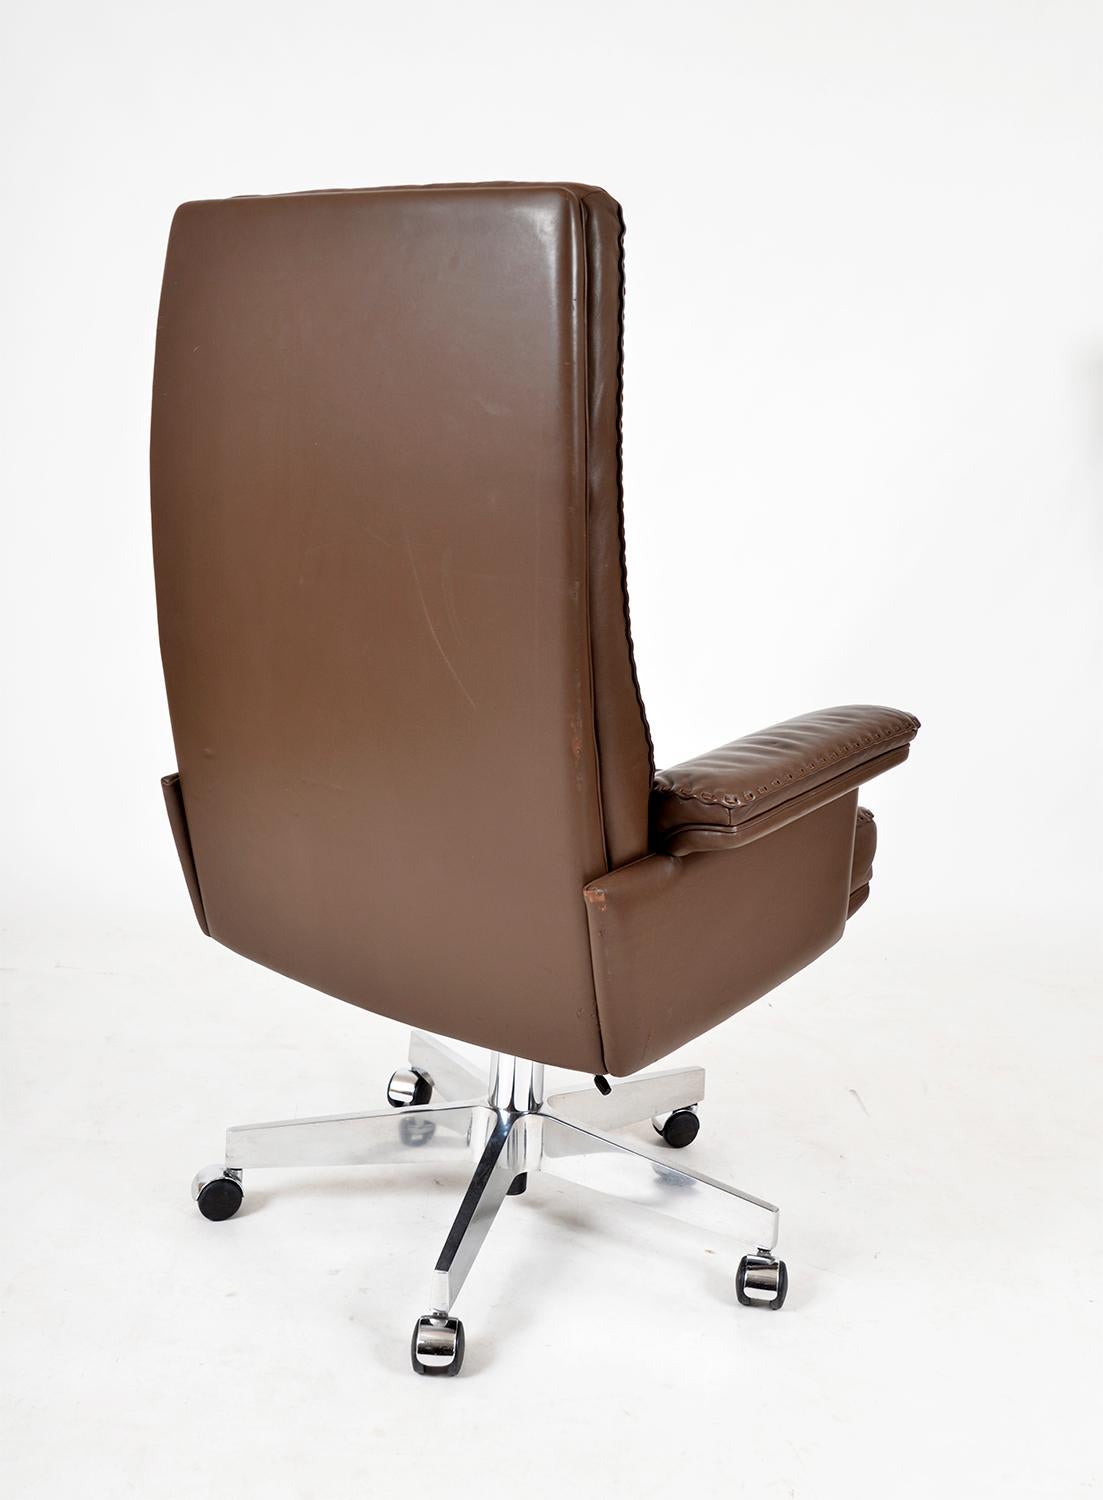 Mid-Century Modern 1970s Swiss De Sede Ds 35 Executive Swivel Leather Office Chair Armchair Castors